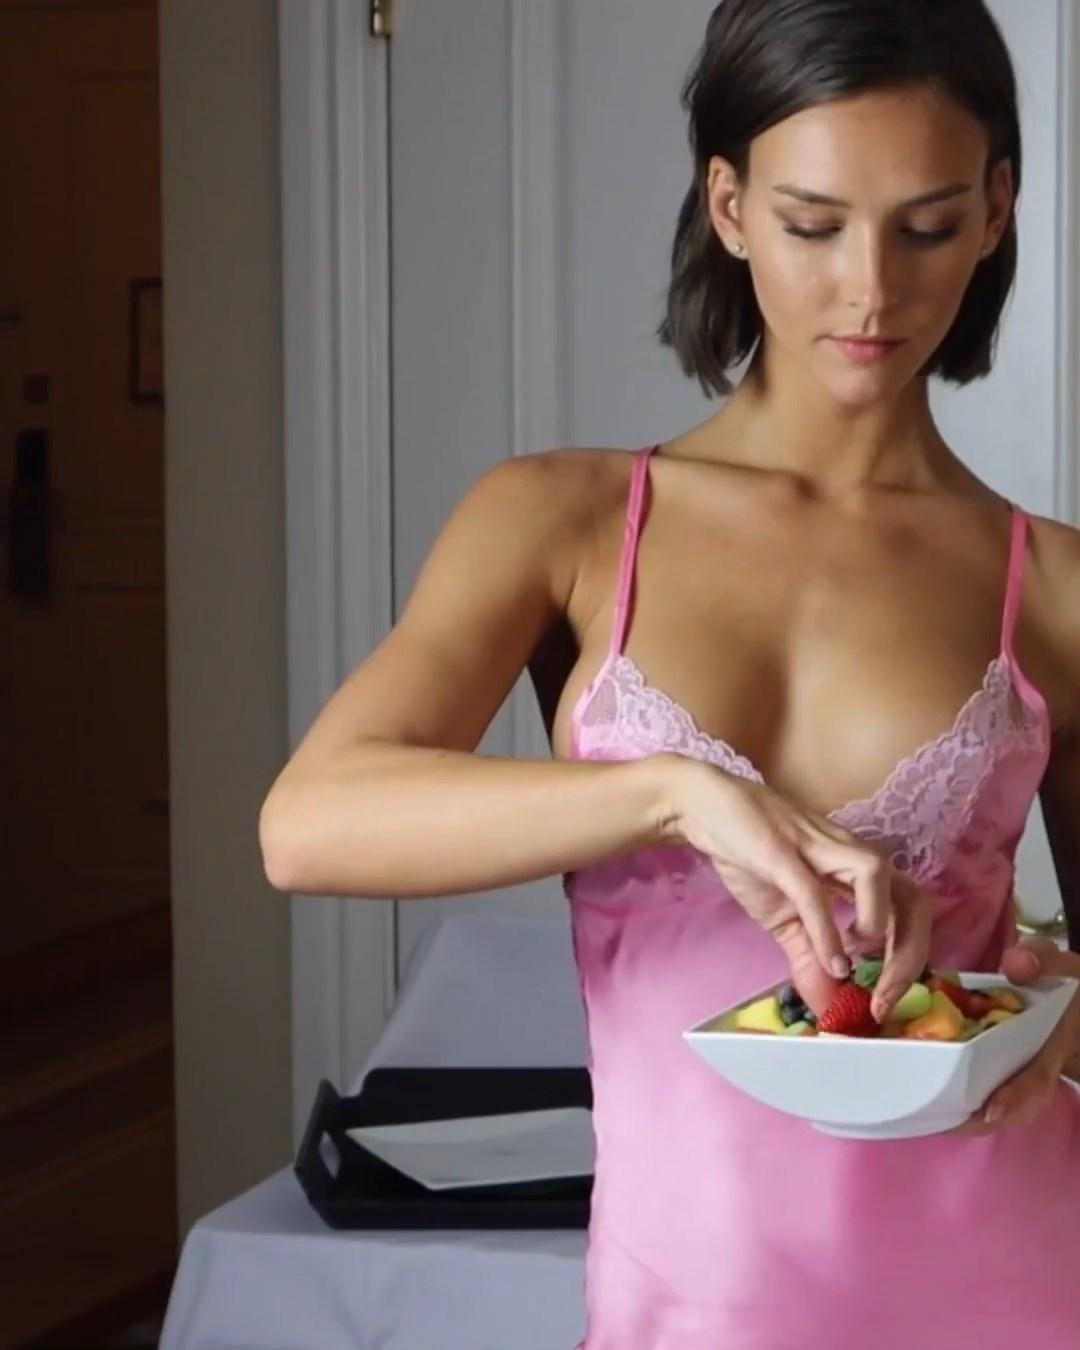 rachel cook topless nightgown modeling video leaked HPZDVN